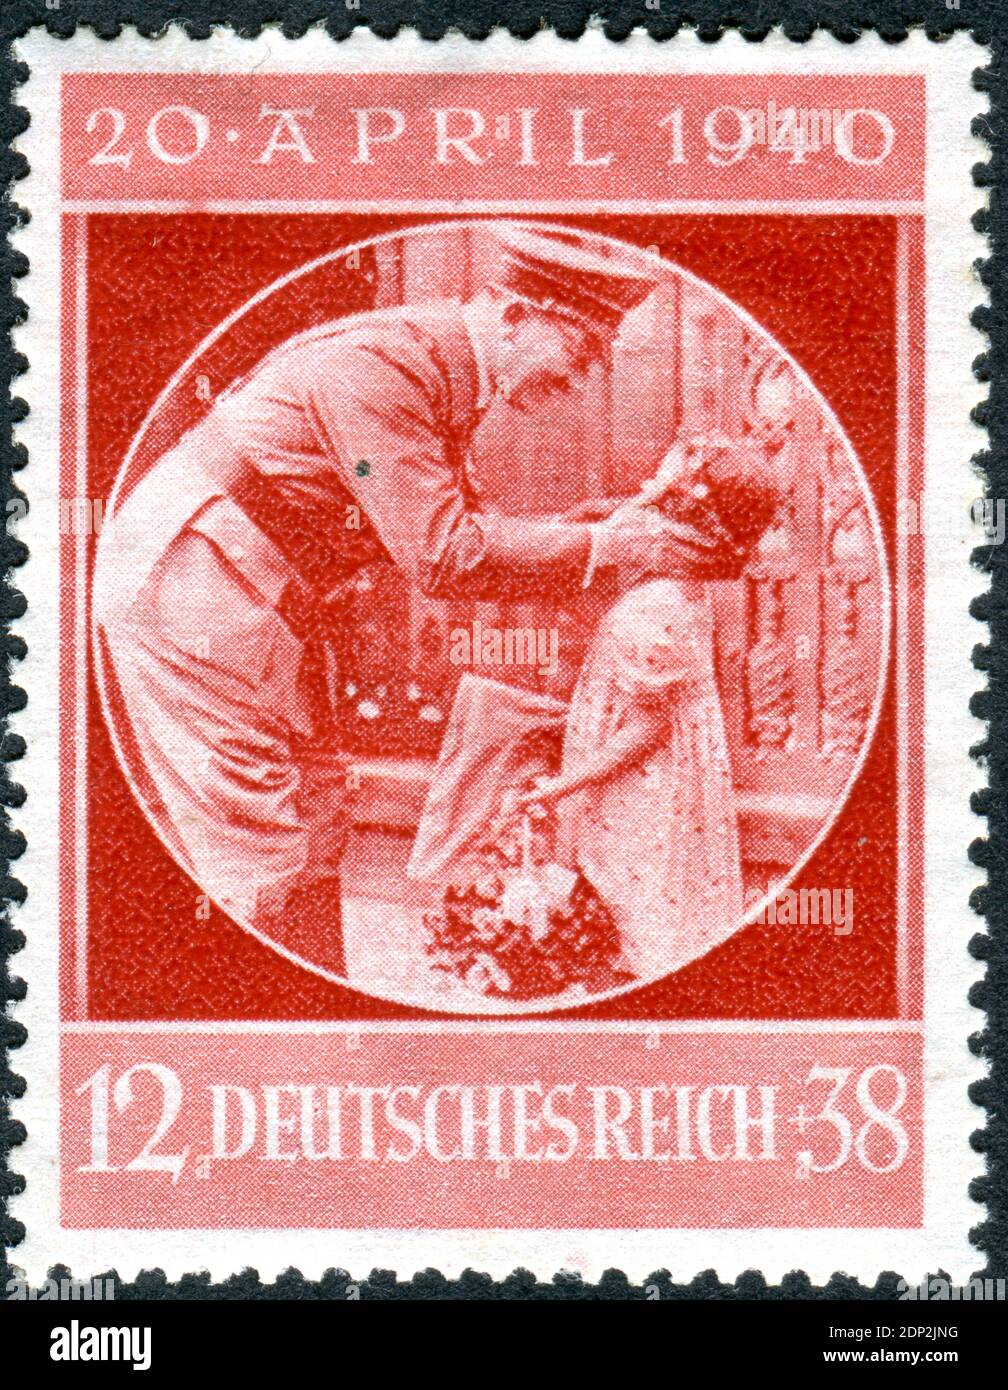 ALLEMAGNE - VERS 1940: Timbre imprimé en Allemagne, montré Adolf Hitler avec enfant. Adolf Hitler - politicien allemand, dirigeant (Fuehrer) d'Allemagne et du Parti nazi, vers 1940 Banque D'Images